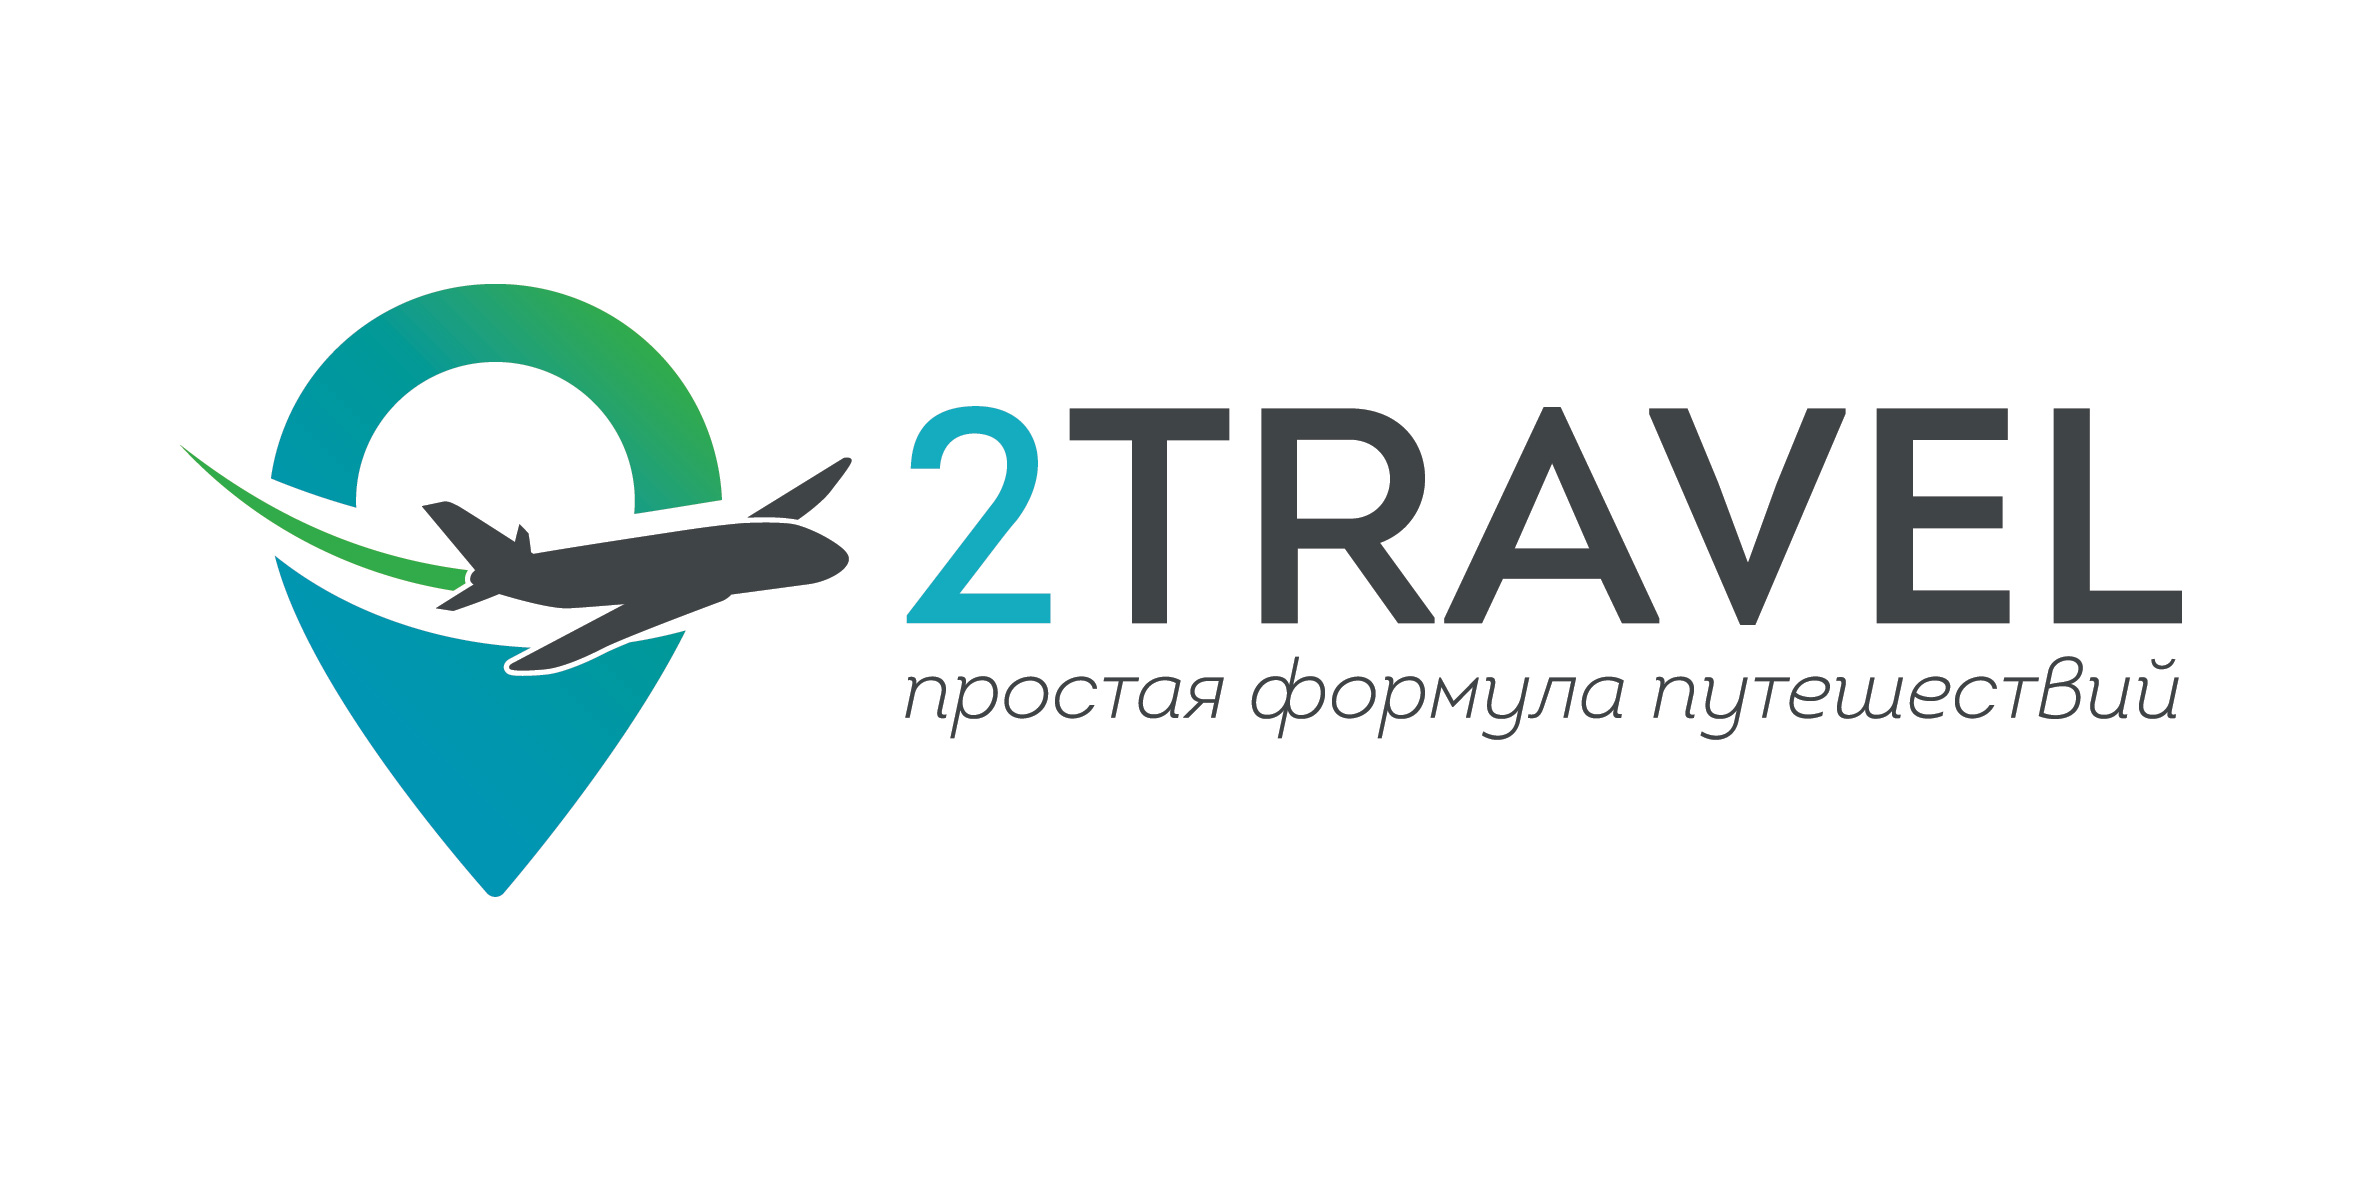 Travel kz. Стильный логотип для турфирмы. Тим 2 Тревел. Логотип для VIP турагентства. Агентство 2 логотип.